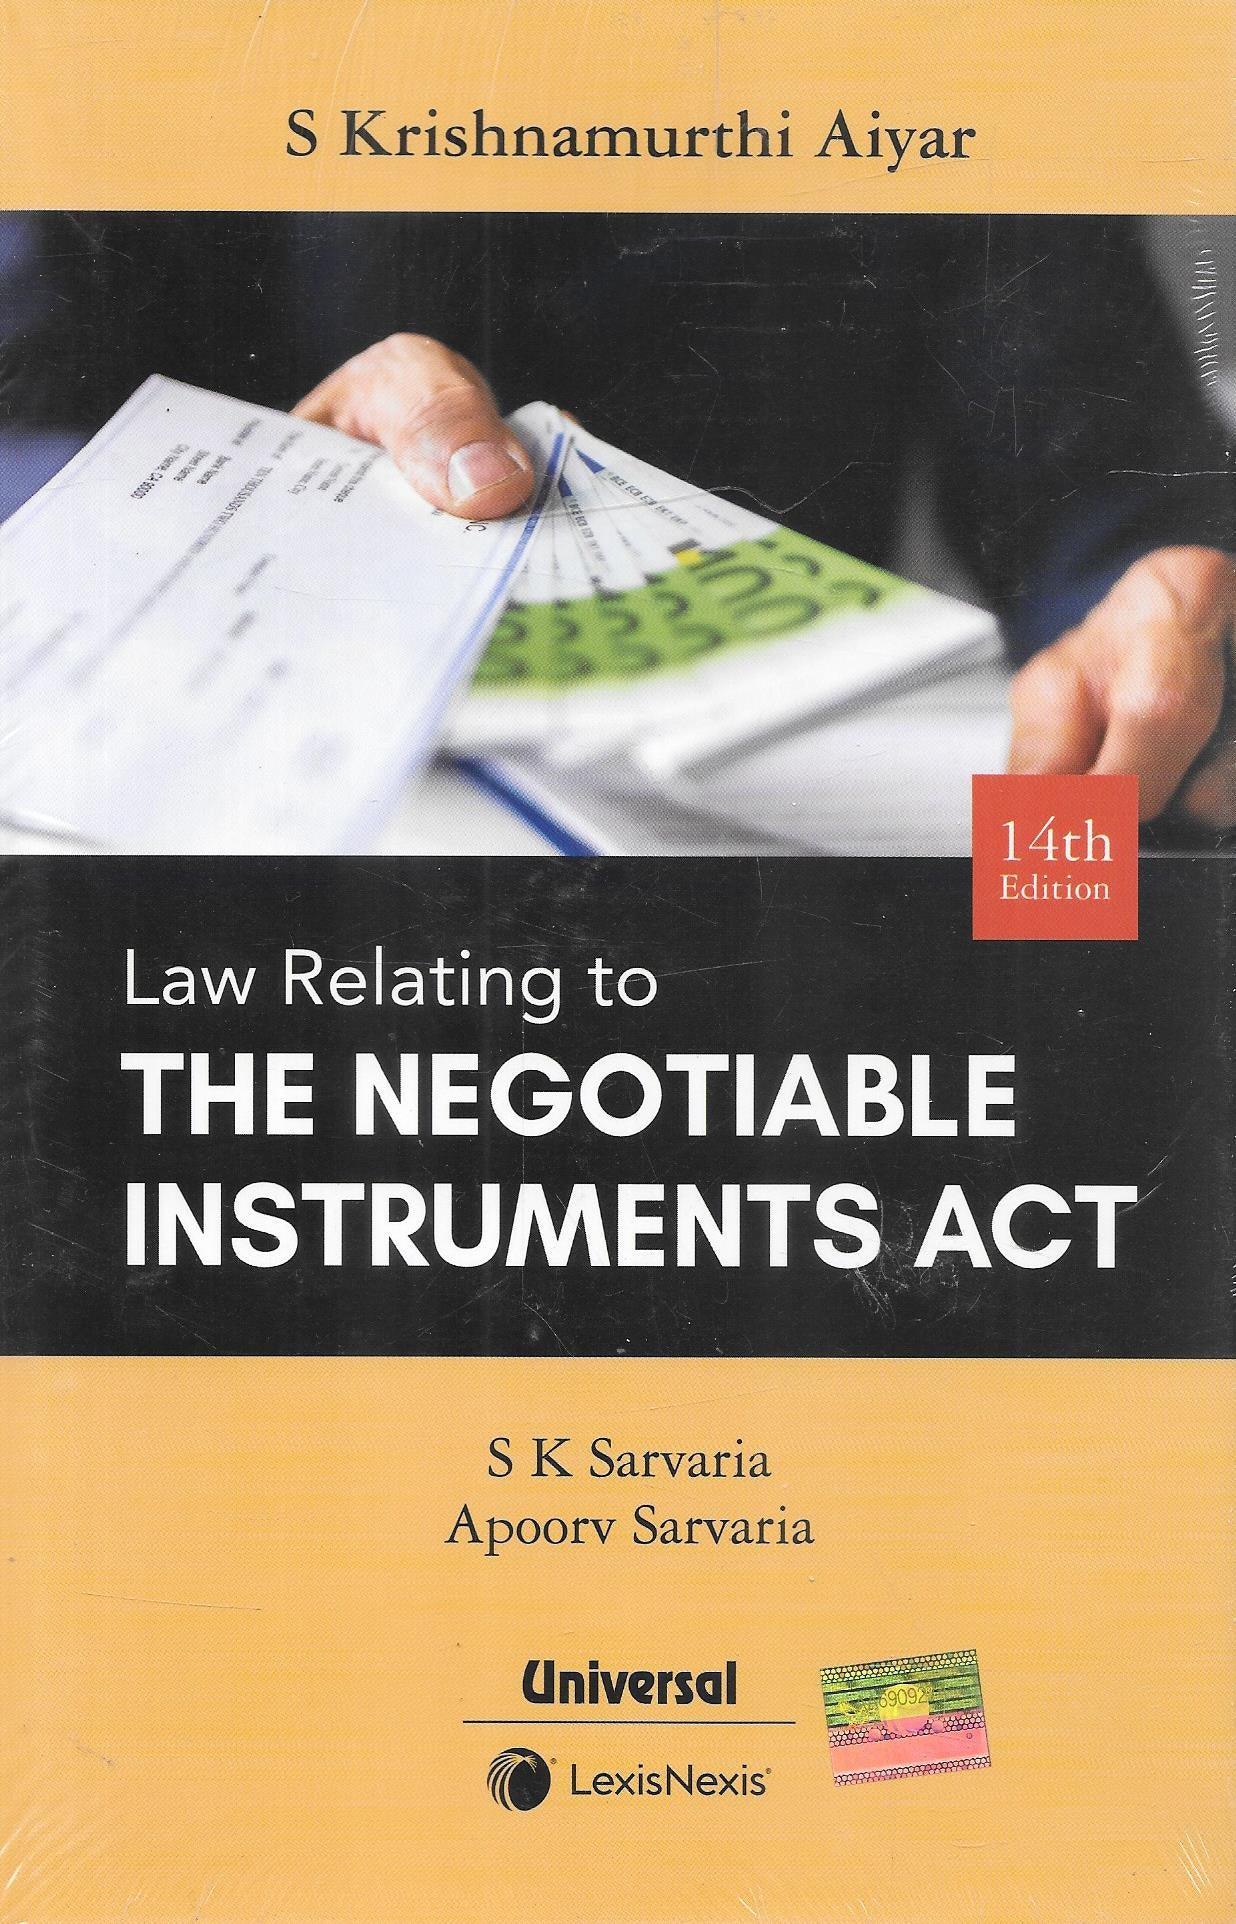 S Krishnamurthy Aiyar: Law Relating to Negotiable Instruments Act